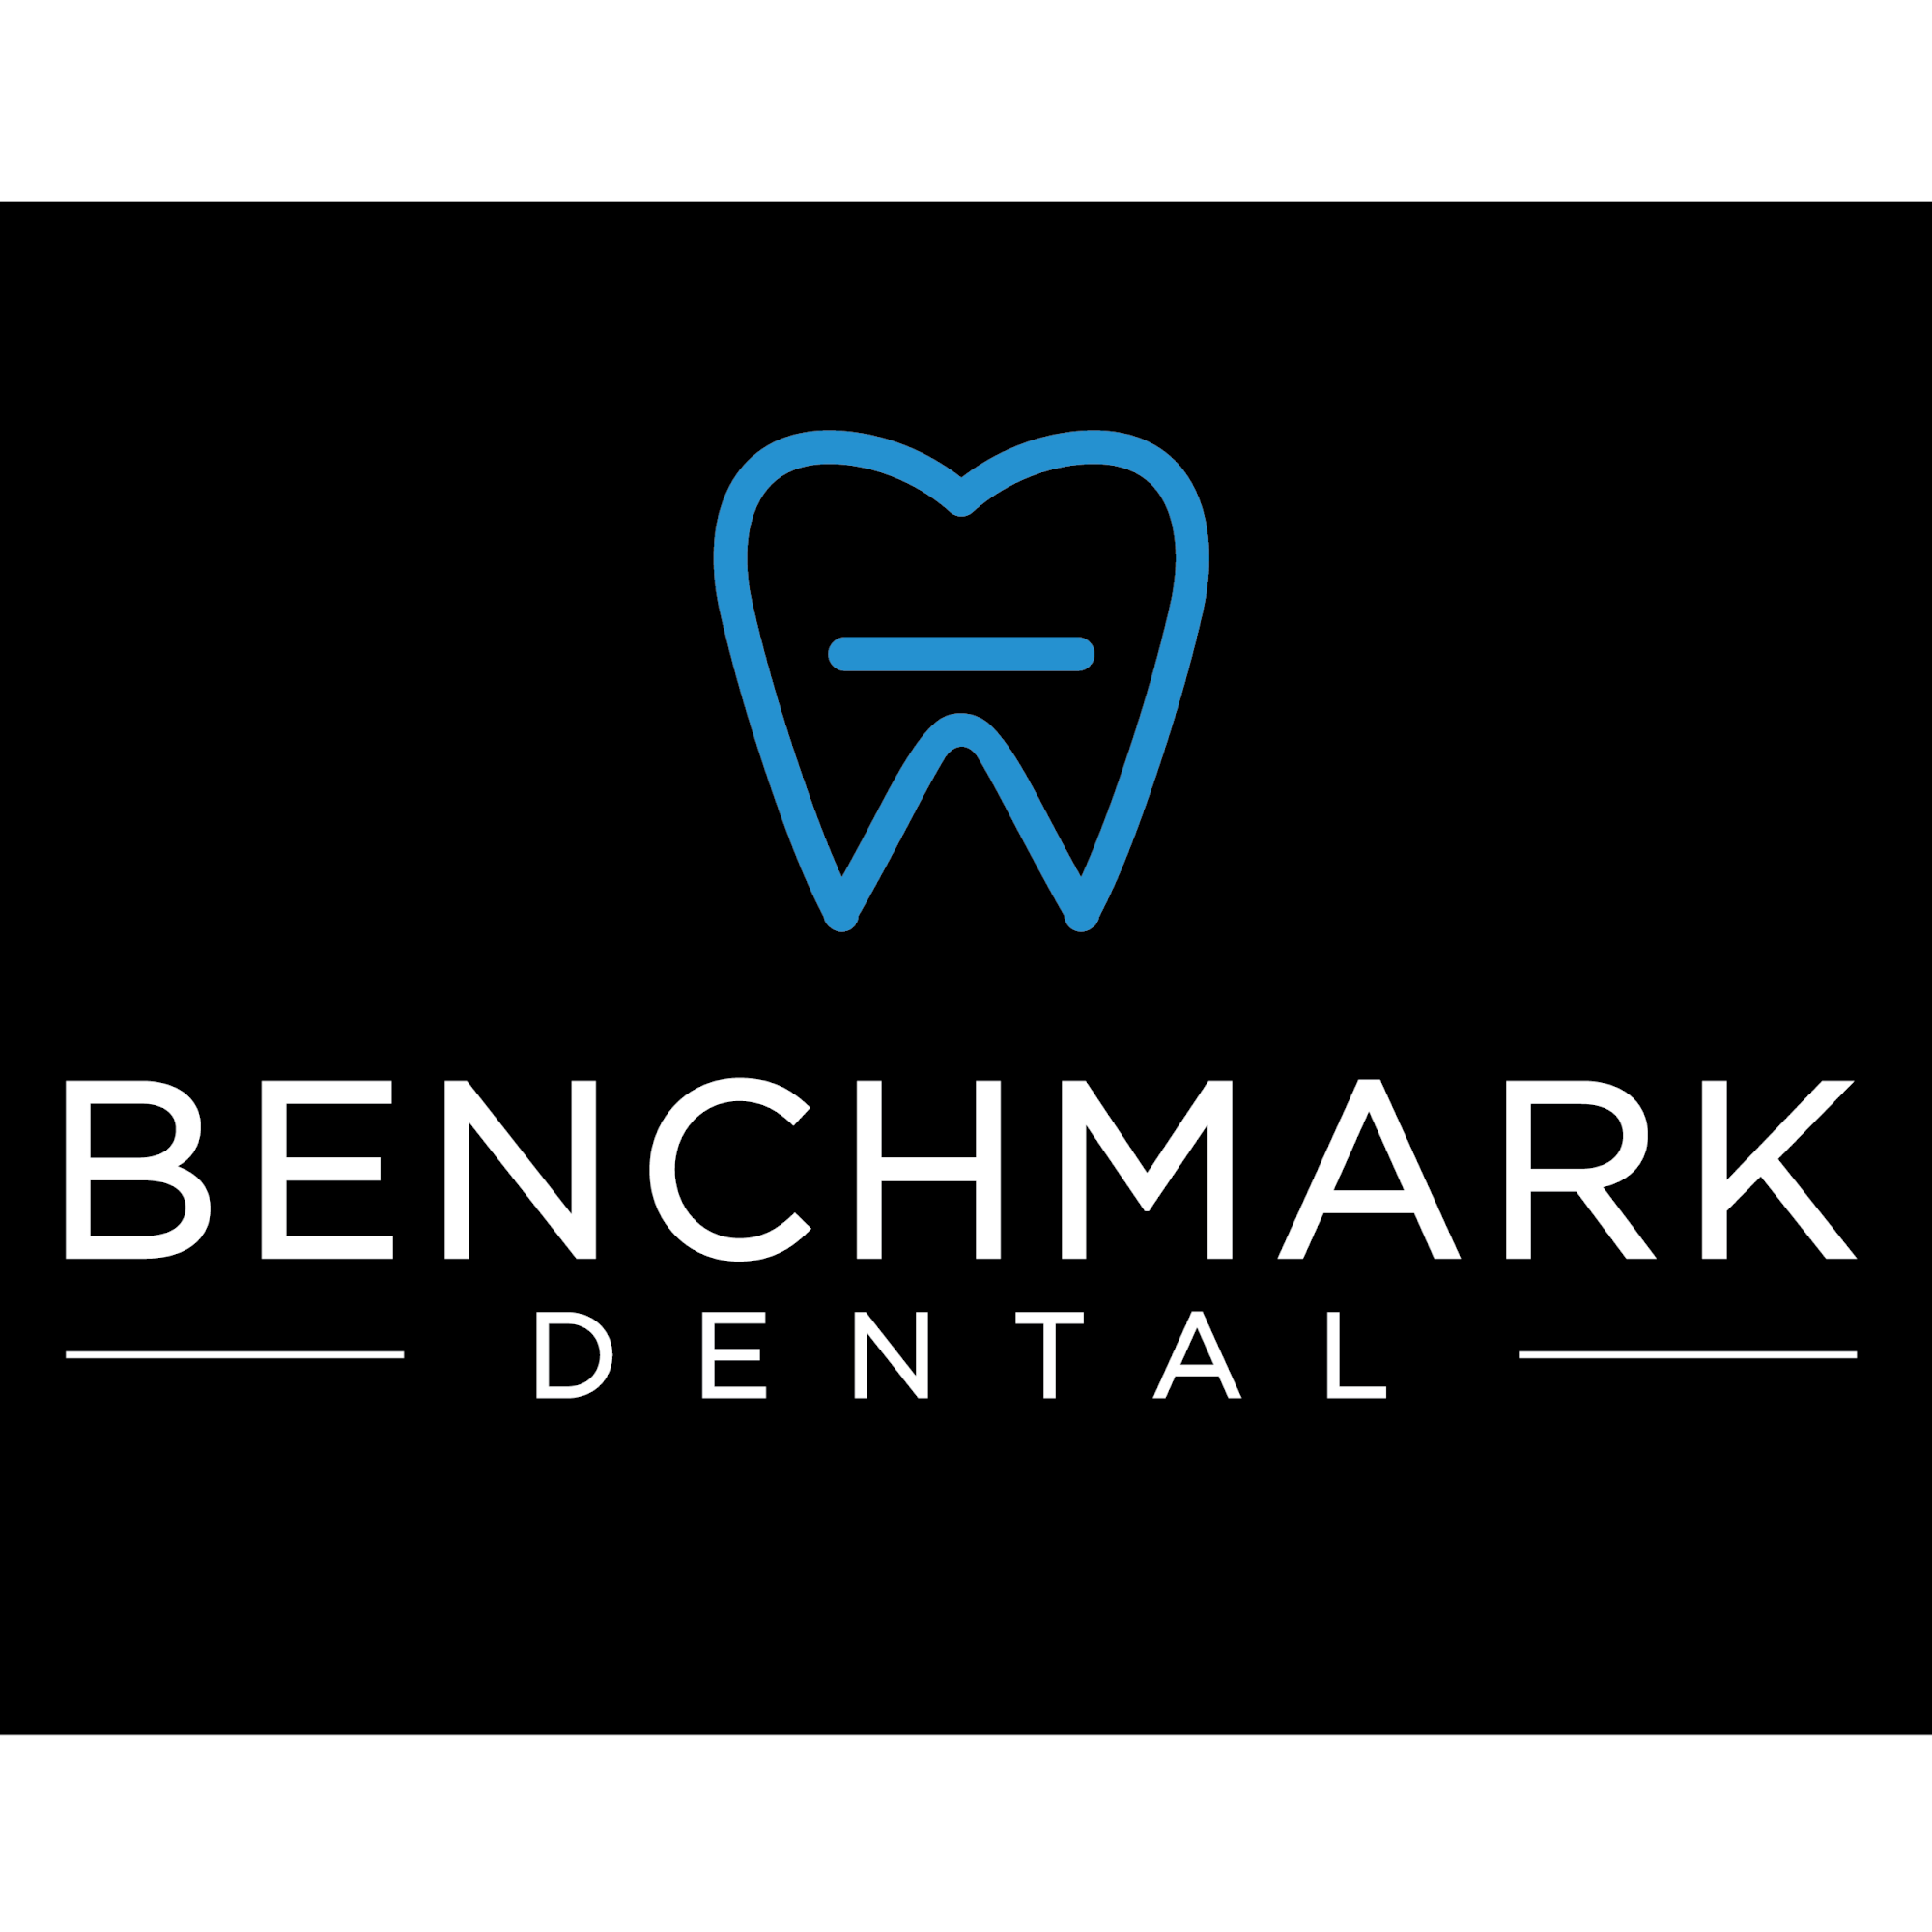 Benchmark Dental Firestone 6130 Firestone Blvd Suite 503, Firestone Colorado 80504